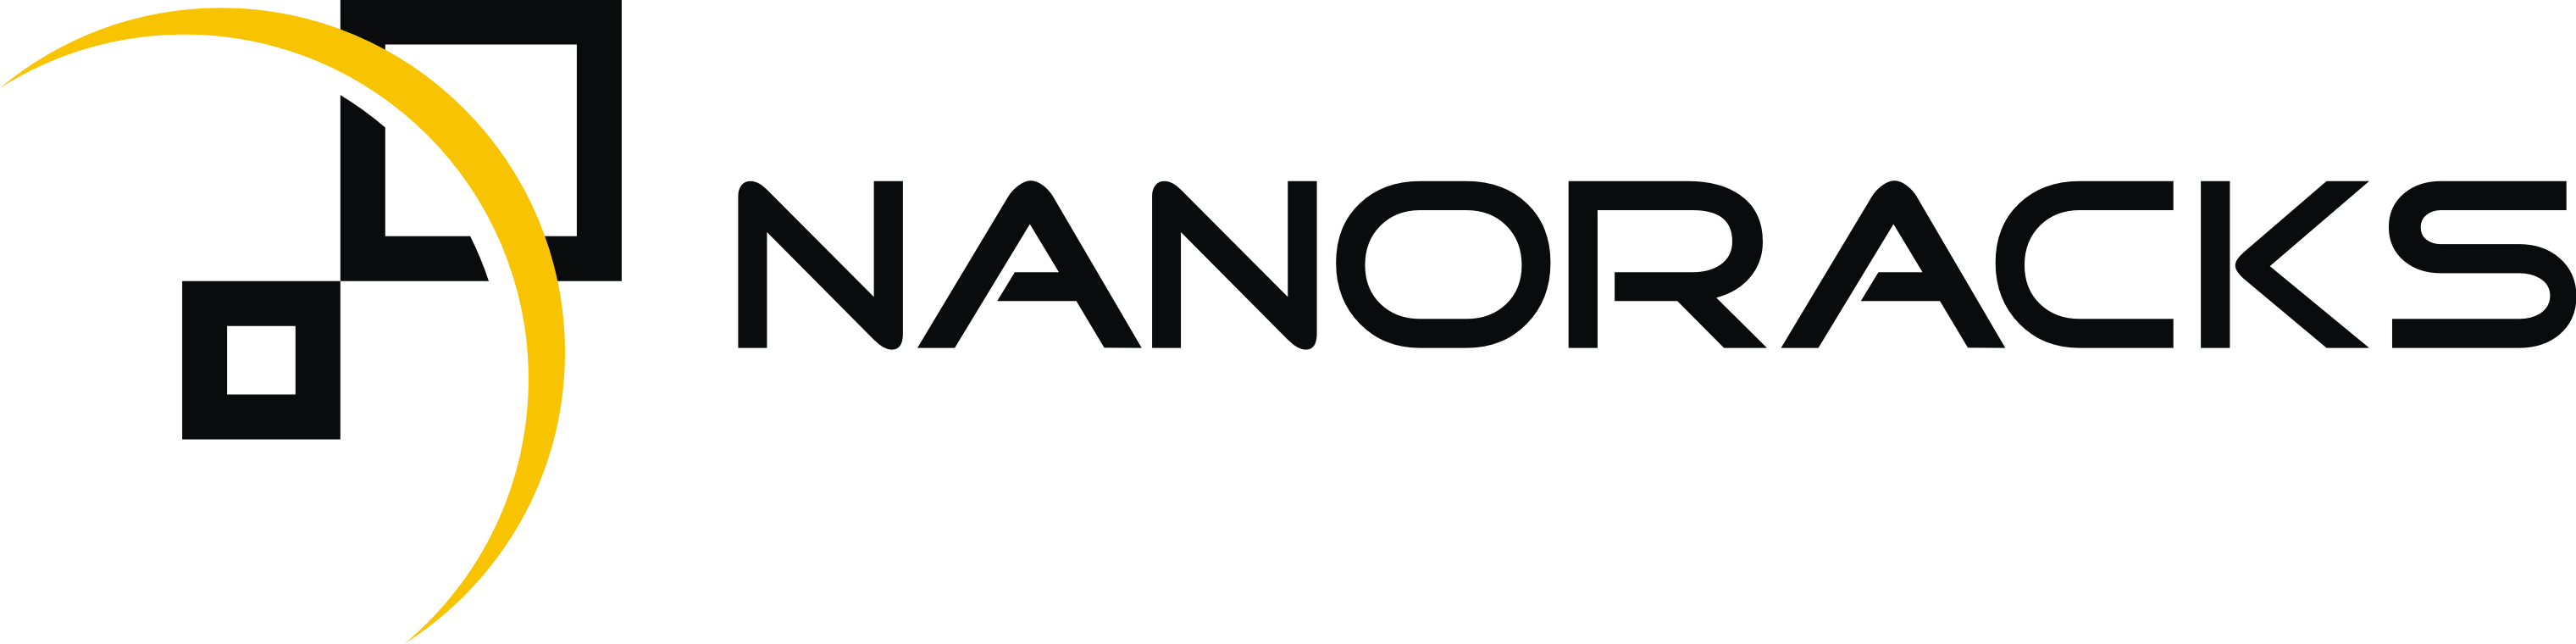 Nanoracks Logo Transparent Background PNG